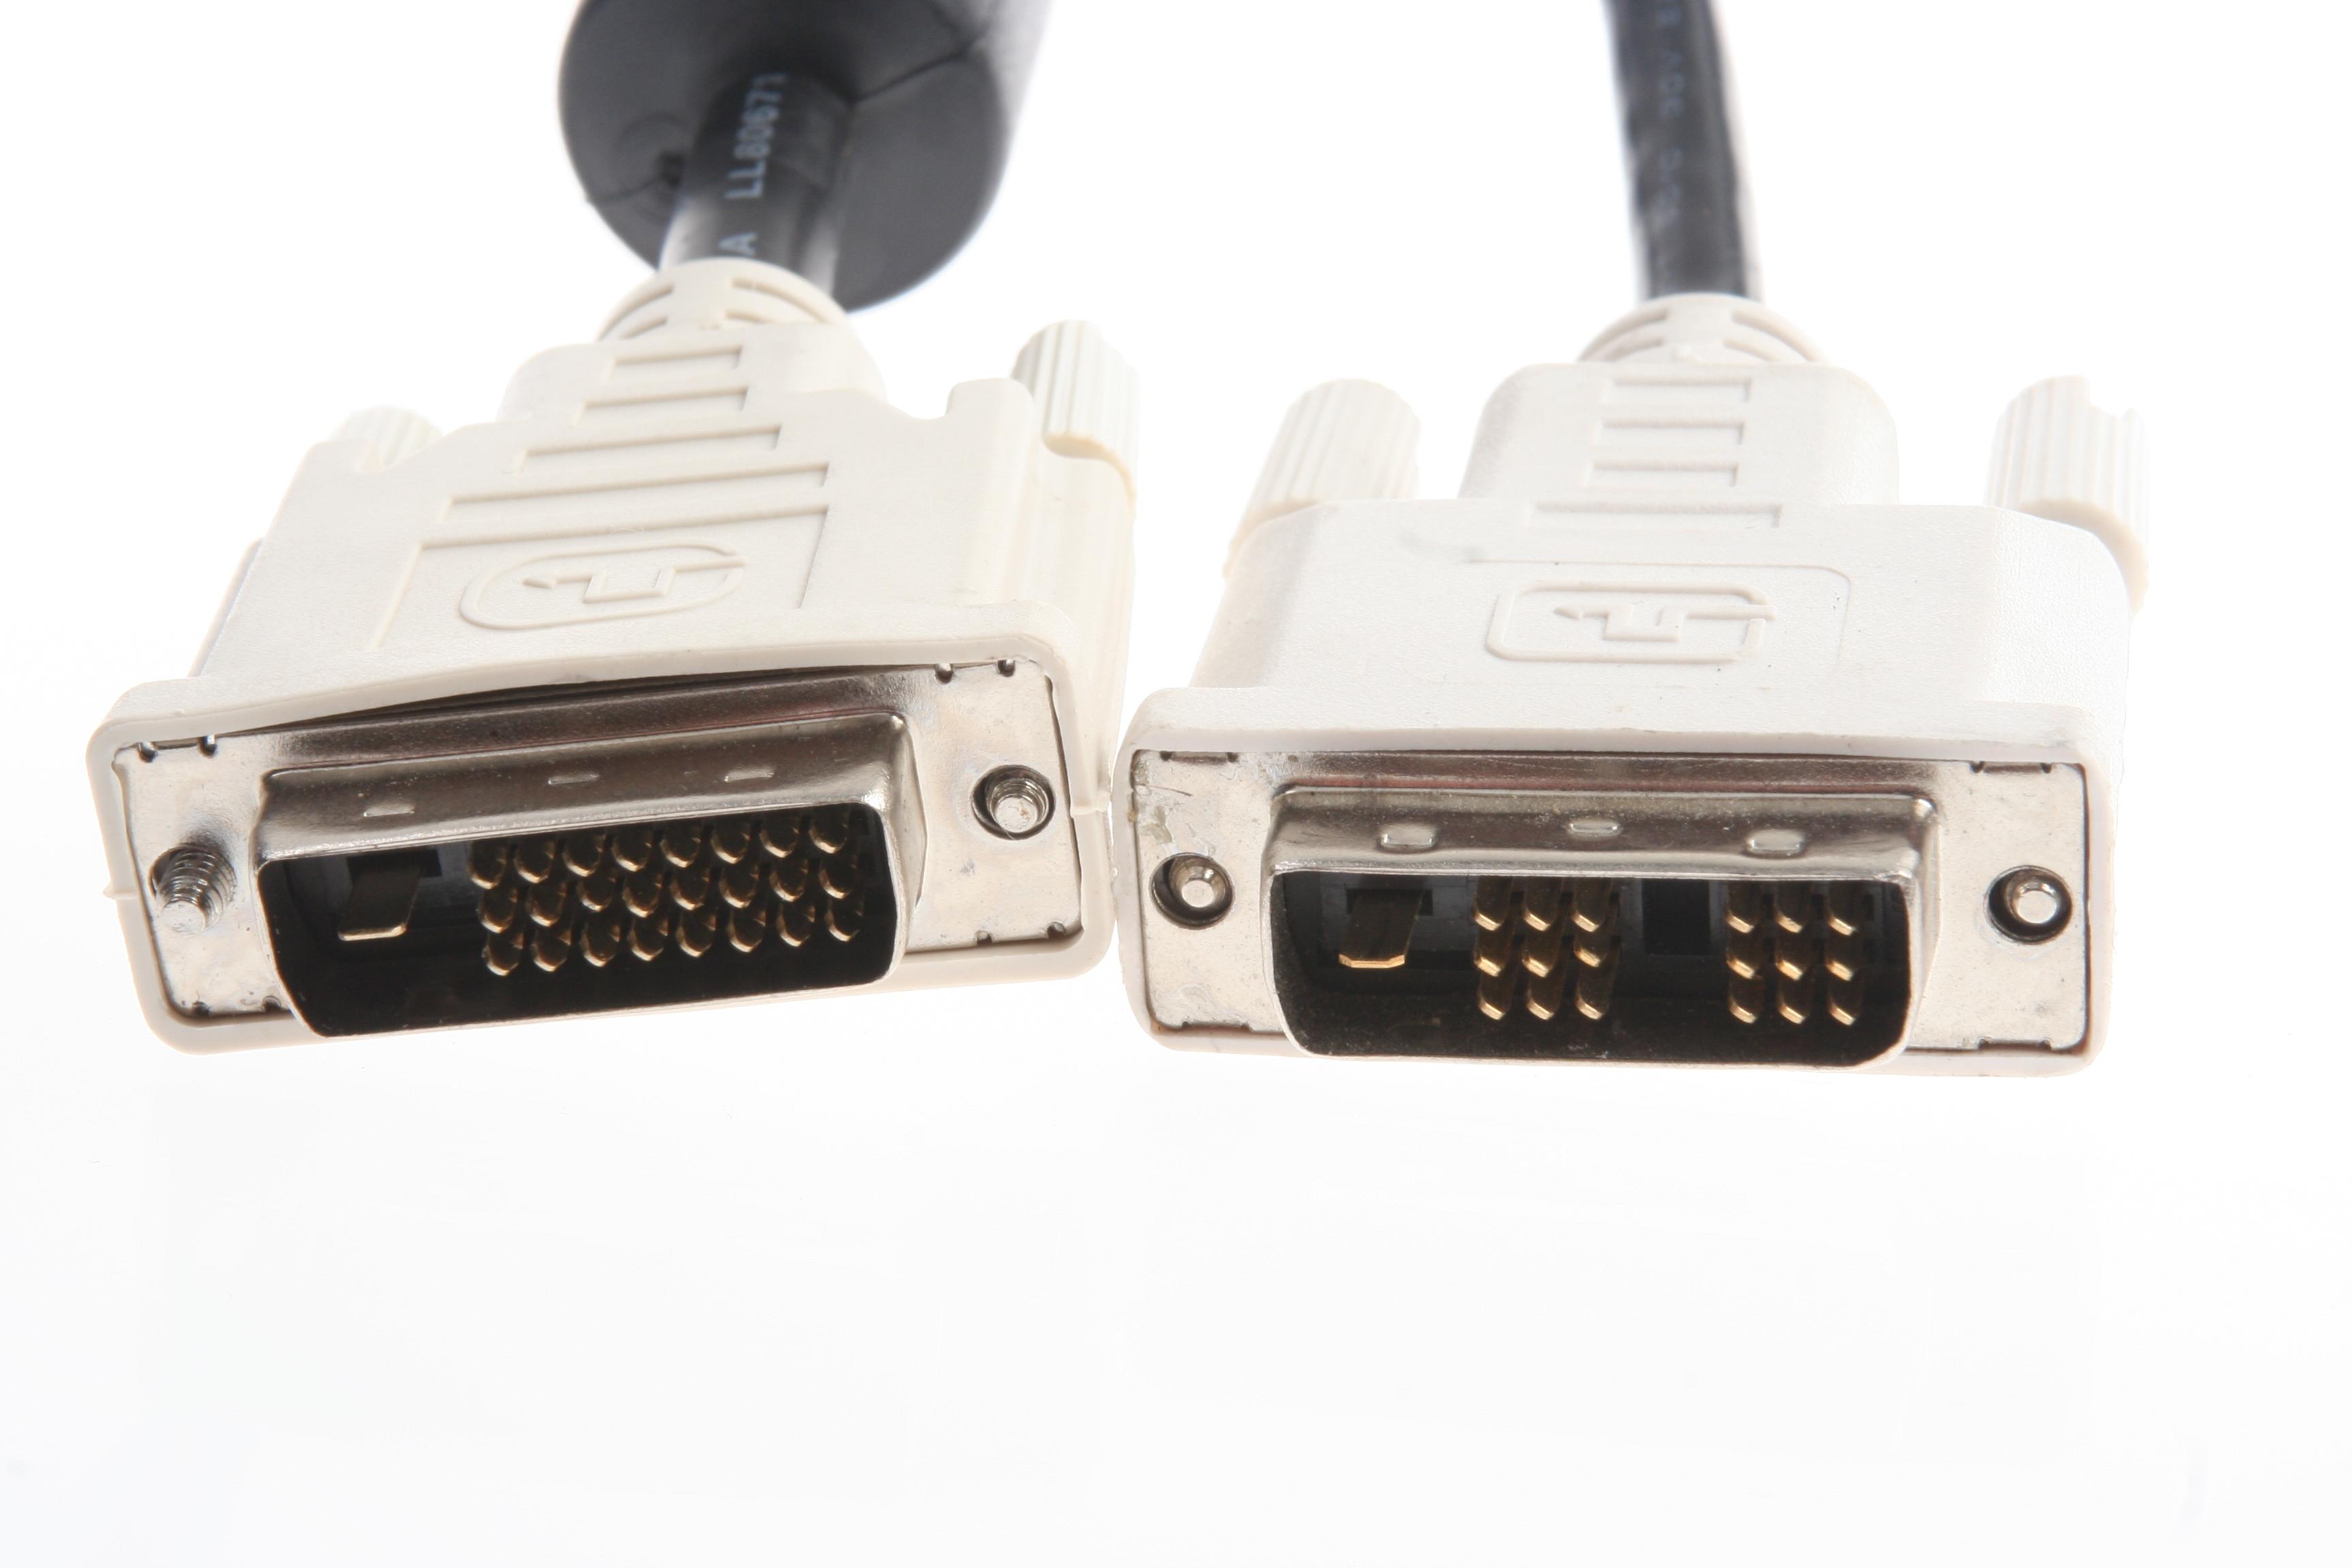 Pass på at du har riktig DVI-kabel. Til venstre på bildet ser du en DVI Dual Link-kabel, og til høyre er det en DVI Single Link-kabel. Bare én av dem har støtte for 120 Hz og 3D-visning.